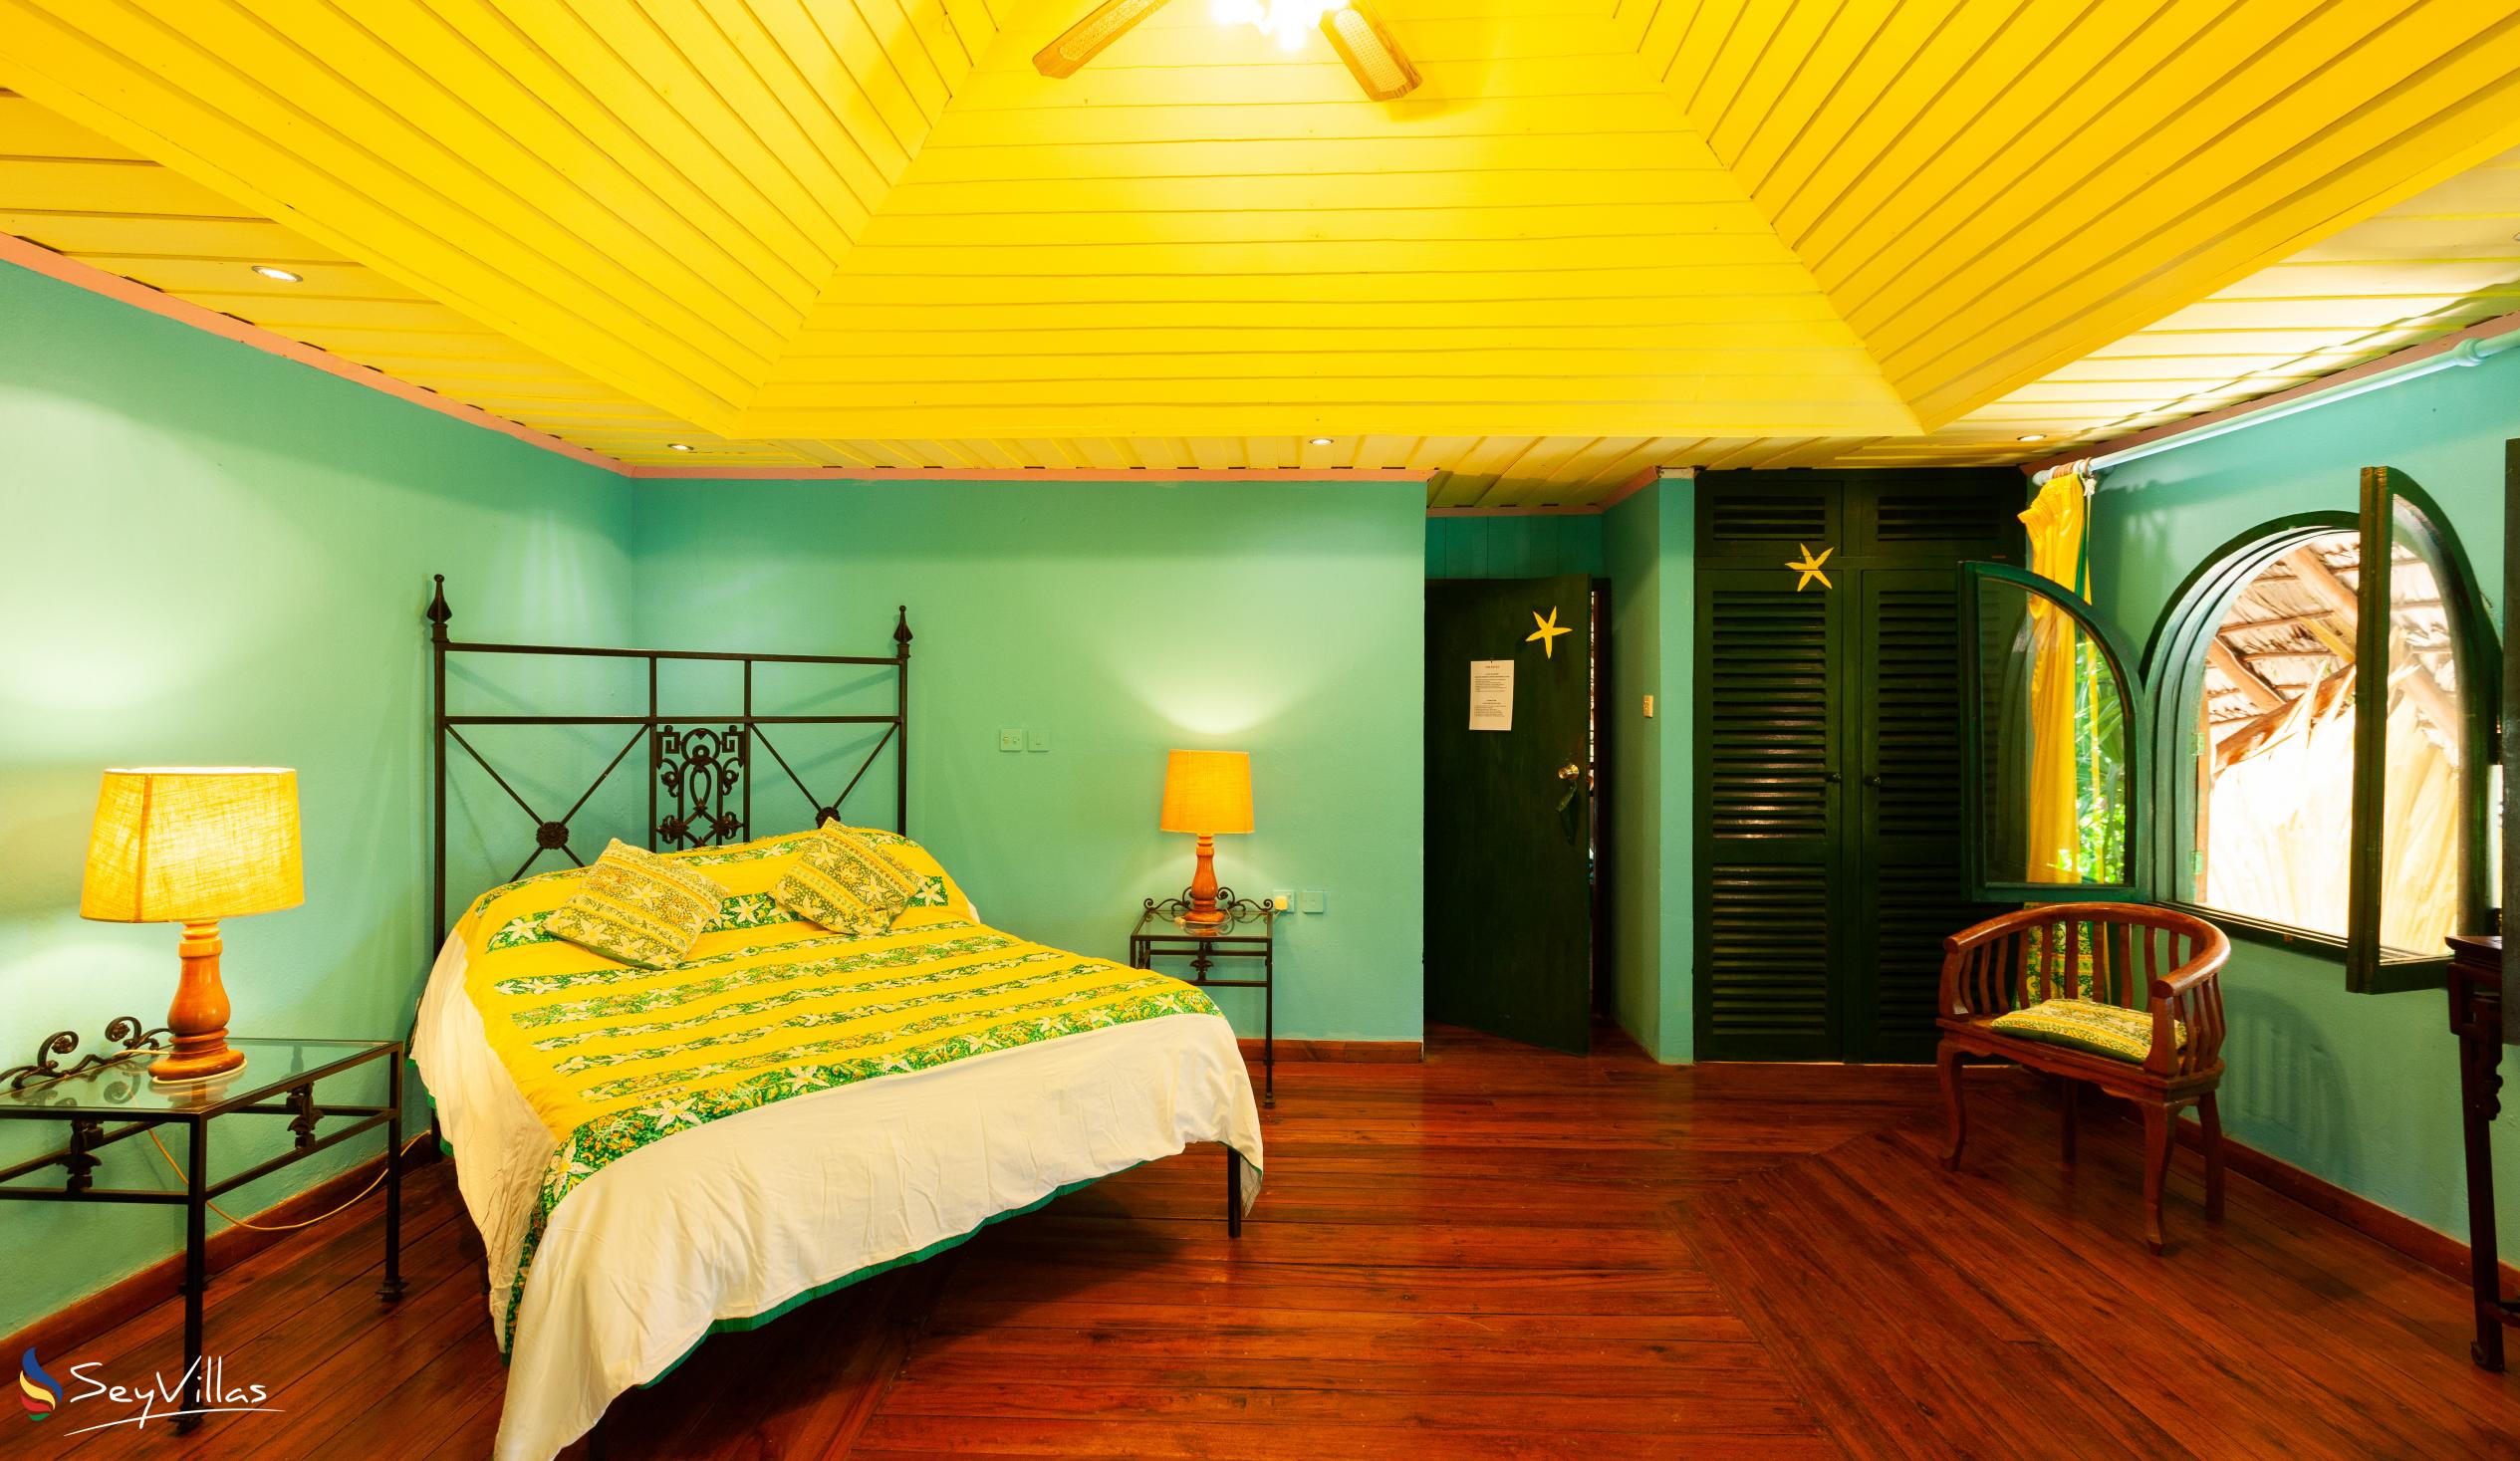 Photo 55: Chauve Souris Relais - Creol Room - Praslin (Seychelles)